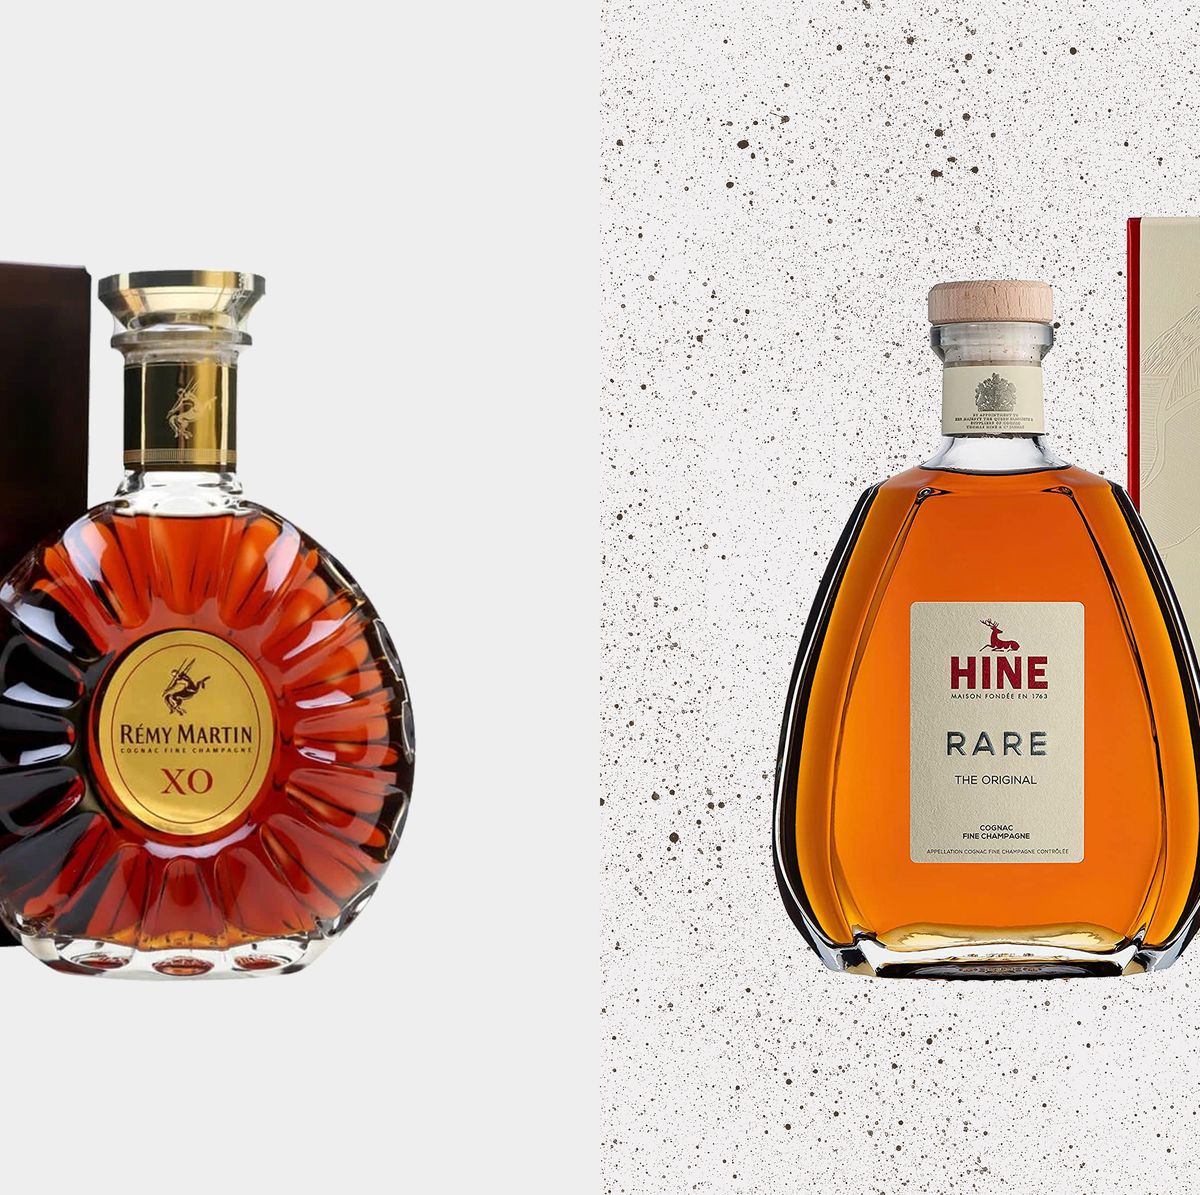 Louis XIII Rare Cask 42,6 Cognac: Buy Online and Find Prices on Cognac -Expert.com